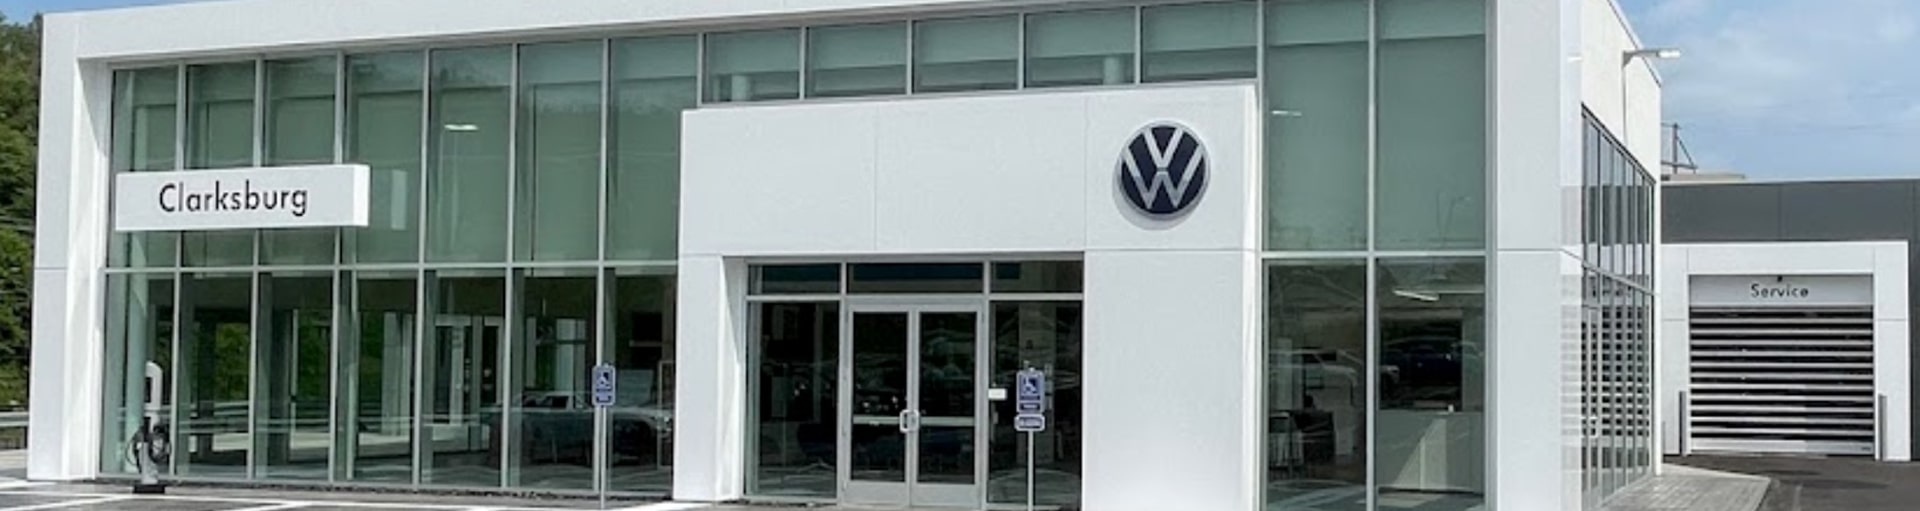 Volkswagen Clarksburg Service Center